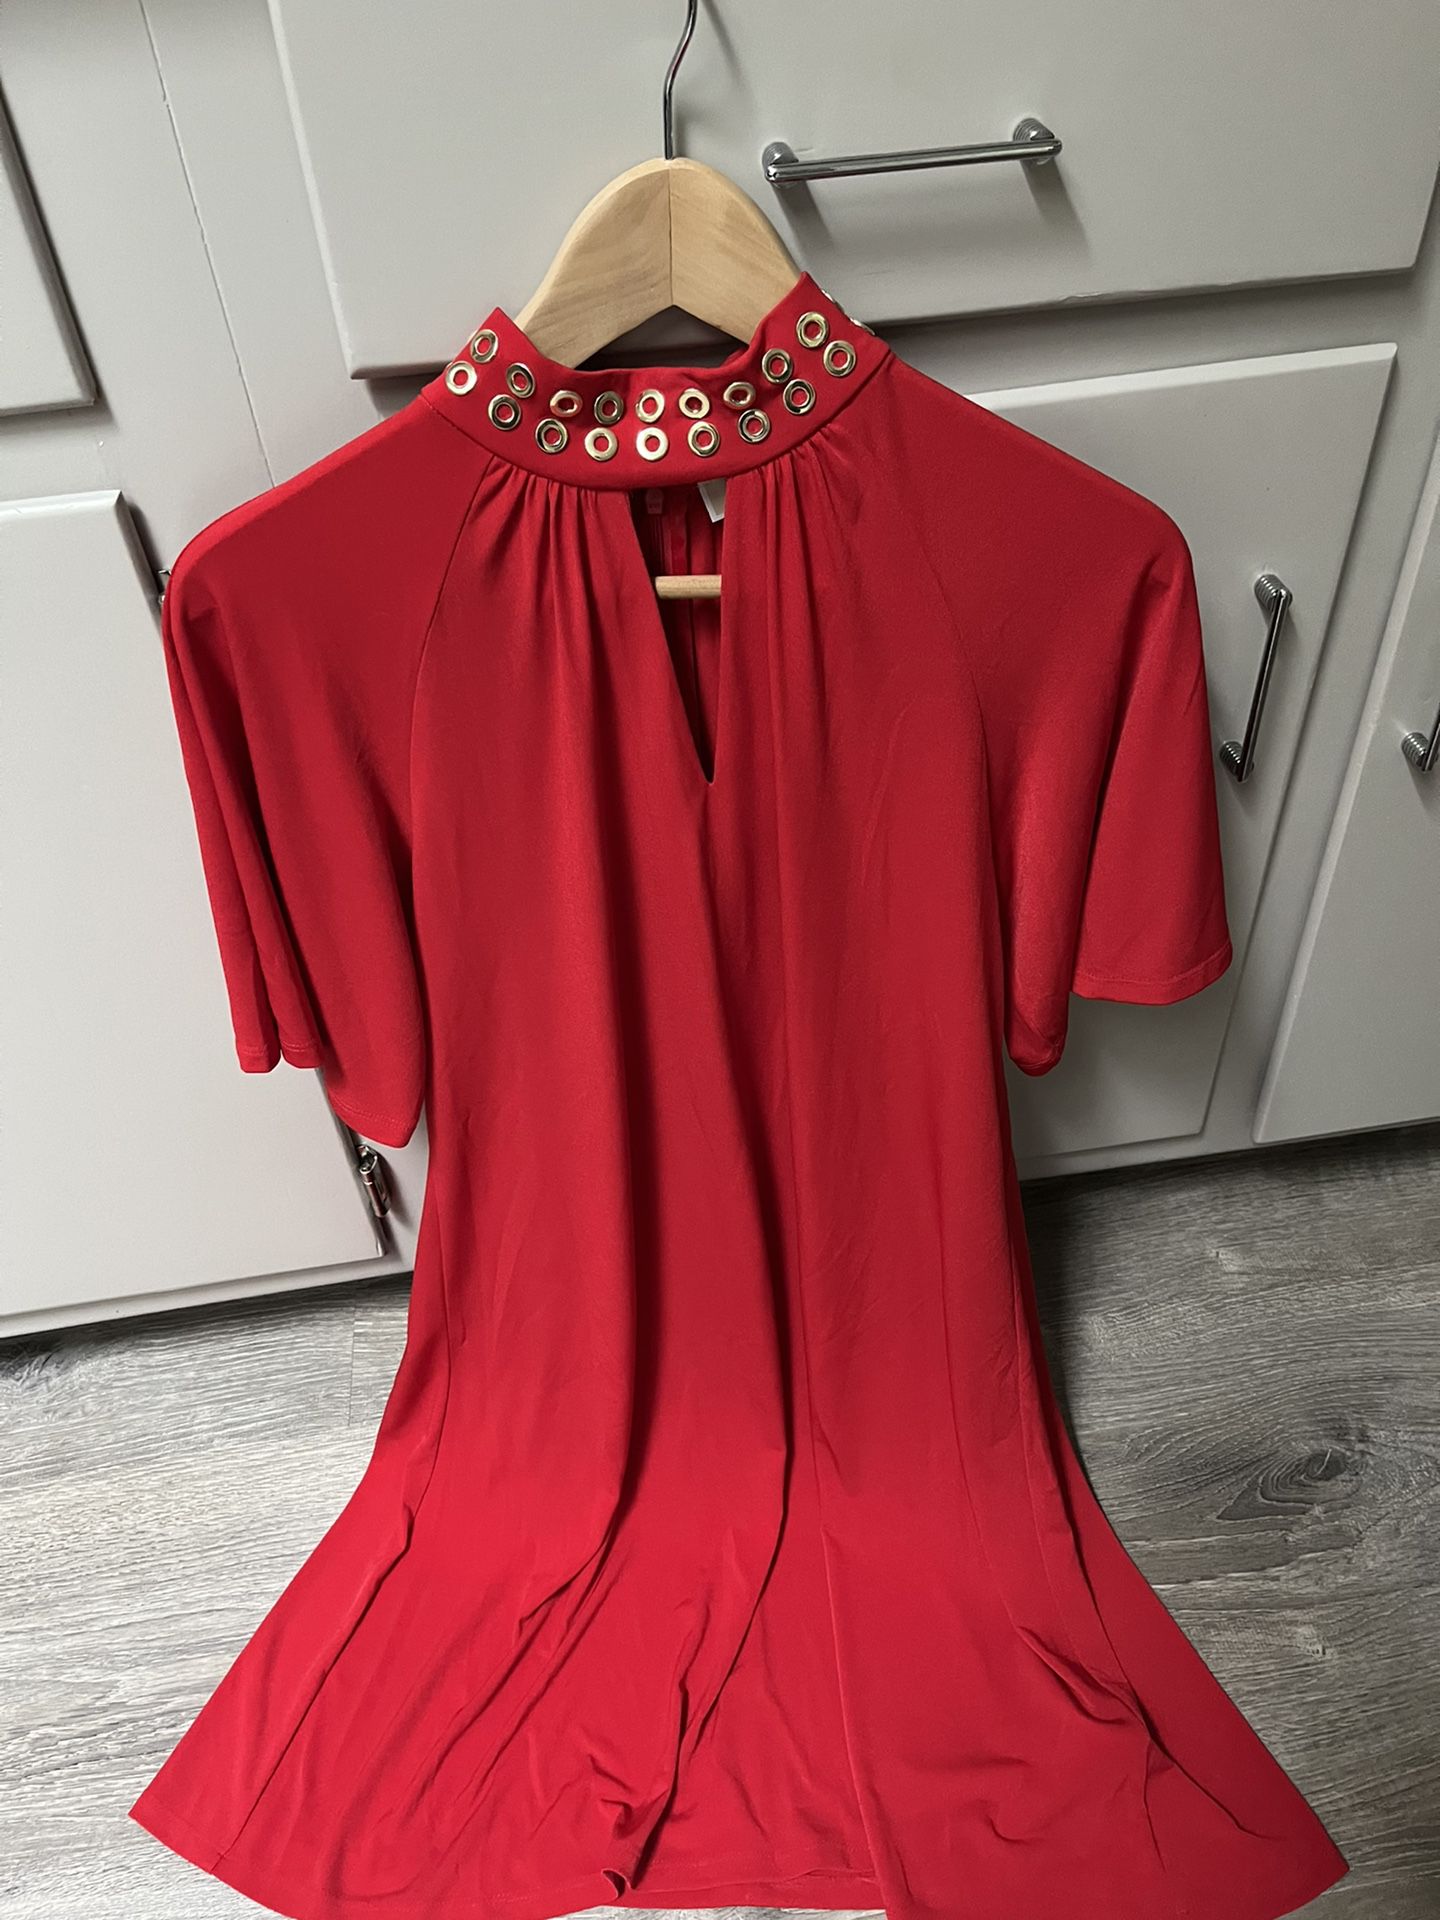 Michael Kors Little Red Dress 